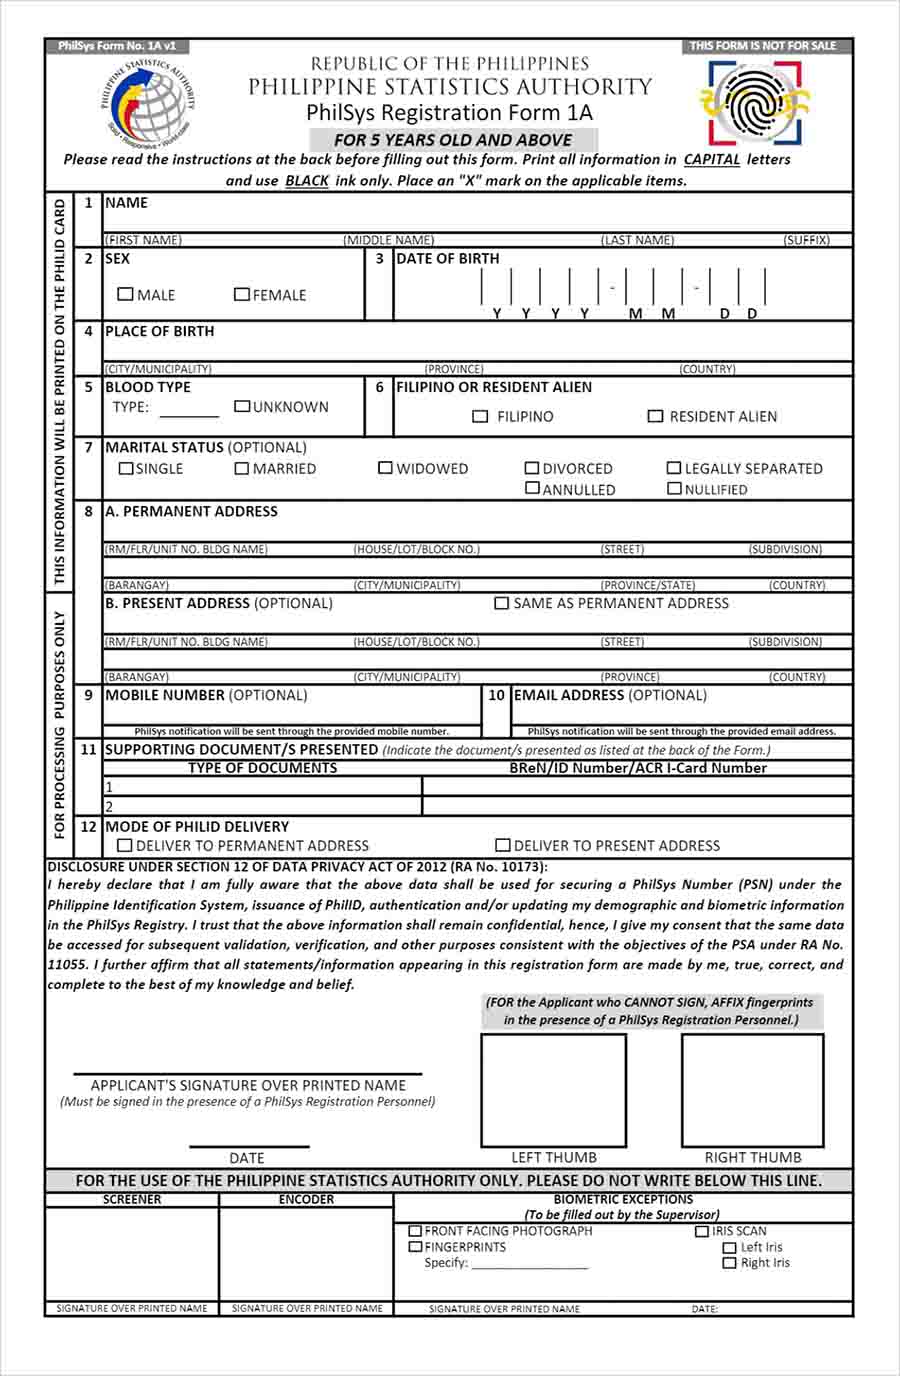 PSA PhilSys Registration Form 1A